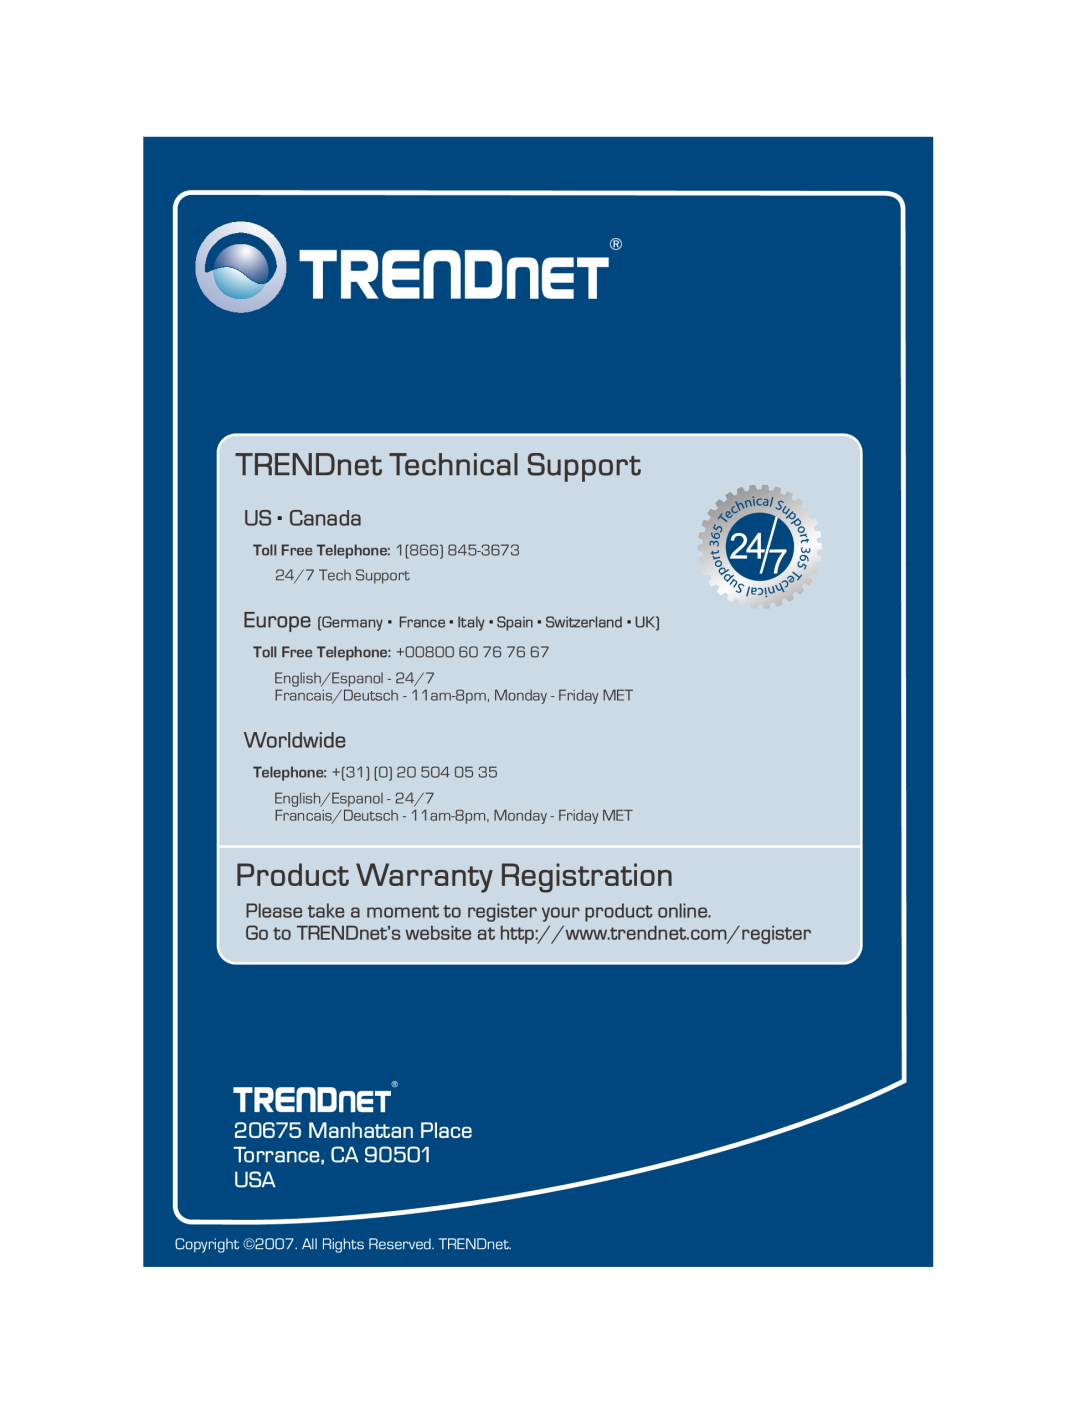 TRENDnet TV-IP312W Manhattan Place Torrance, CA USA, TRENDnet Technical Support, Product Warranty Registration, Worldwide 